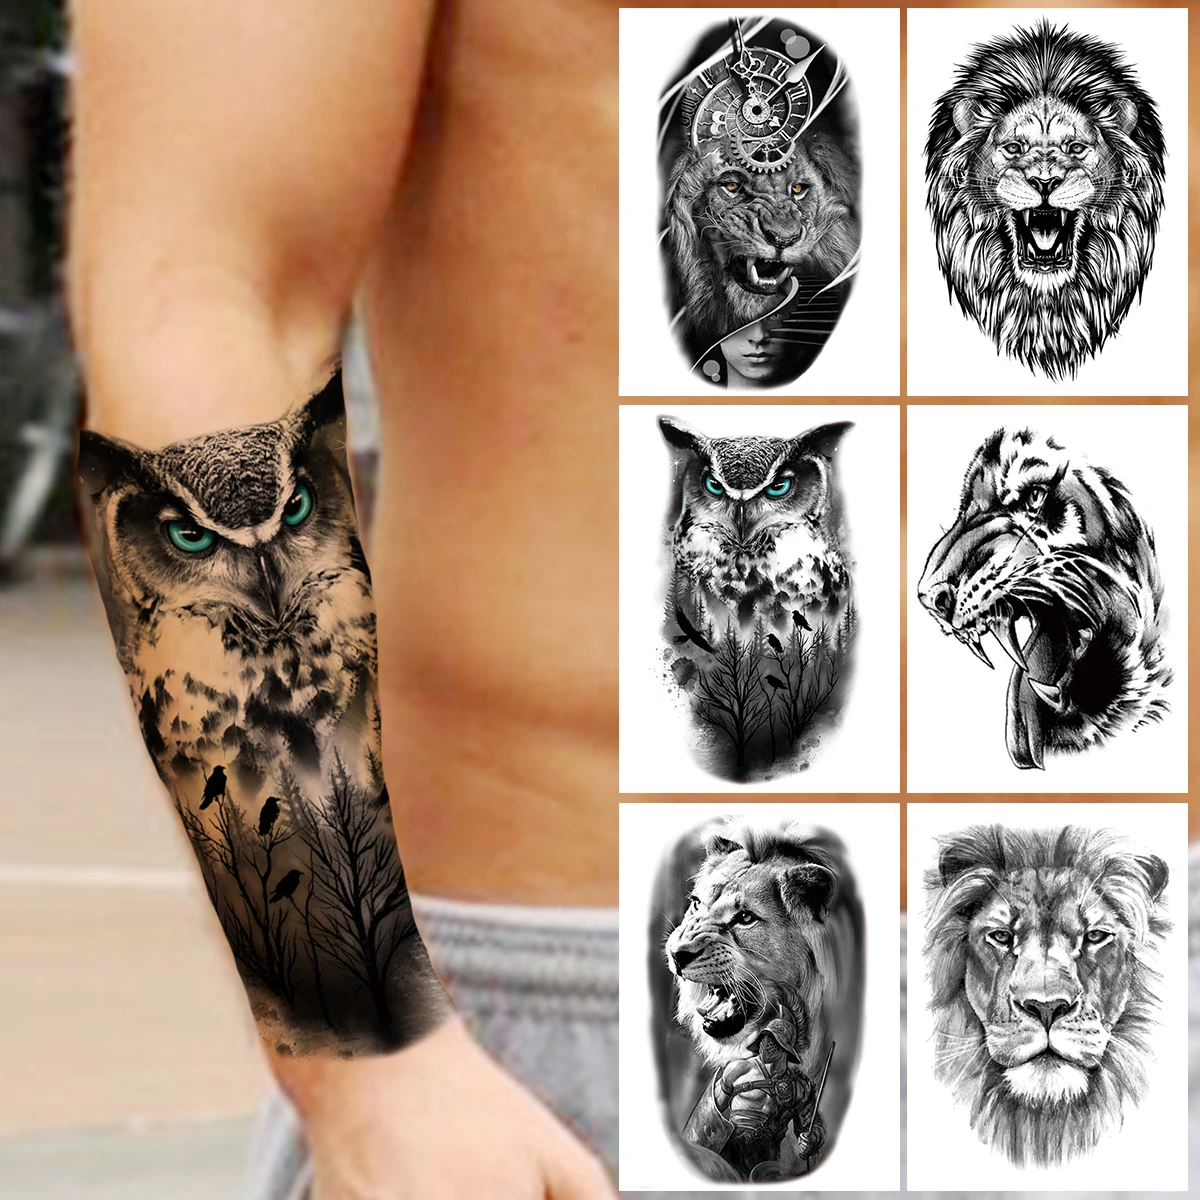 Owl Forest Temporary Tattoo For Men Women Kids Boys Lion Fake Monster Tattoos Sticker Compass Black Water Transfer Tatoos Arm